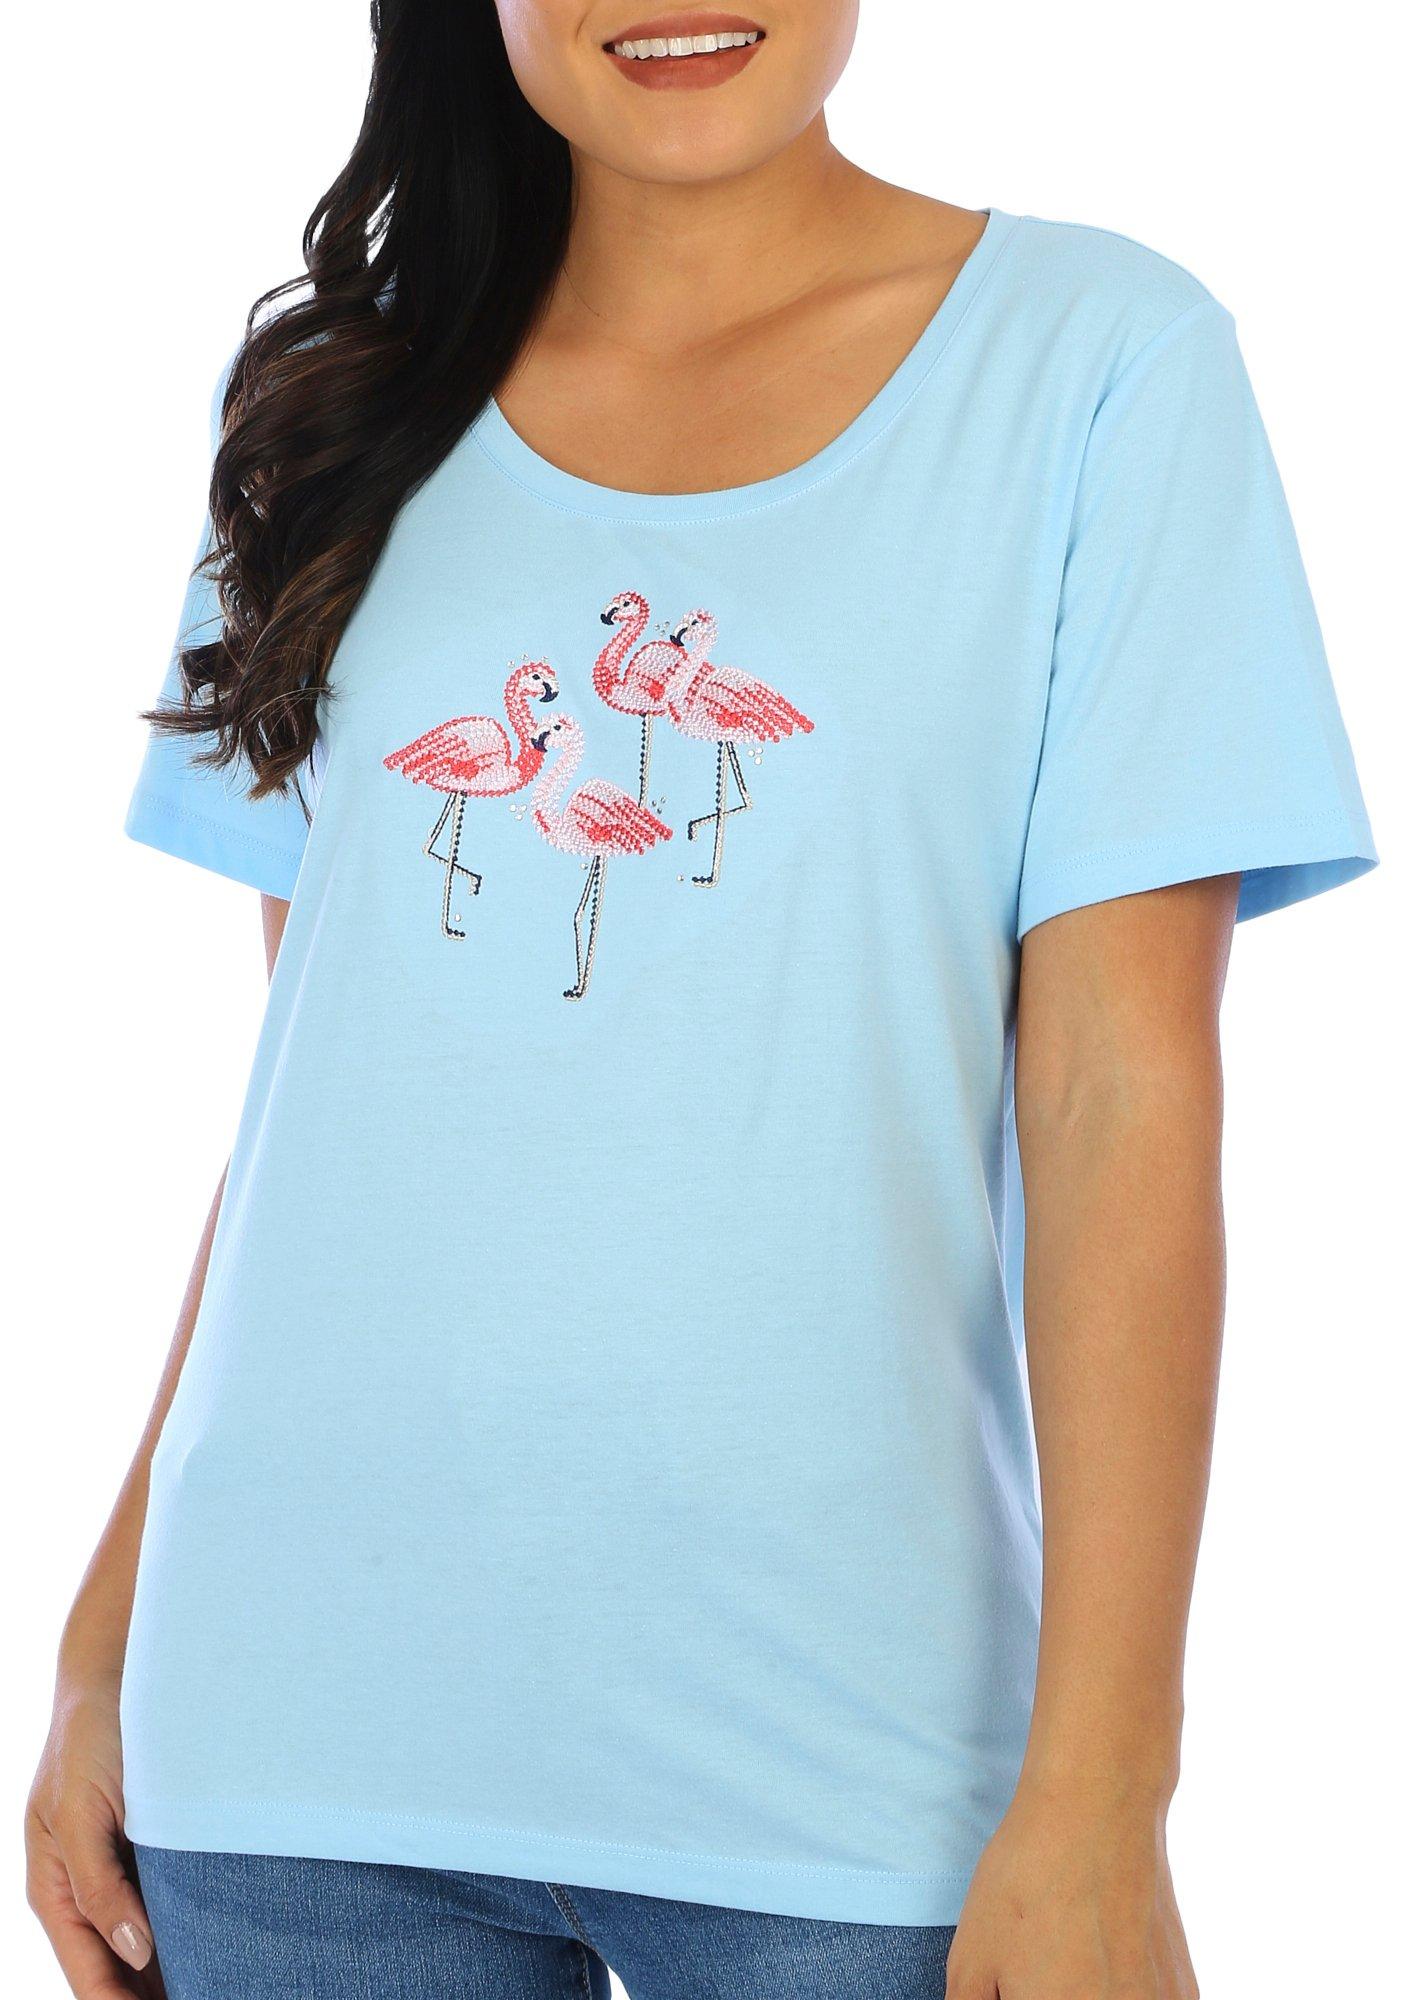 Coral Bay Petite Embellished Flamingo Short Sleeve Top